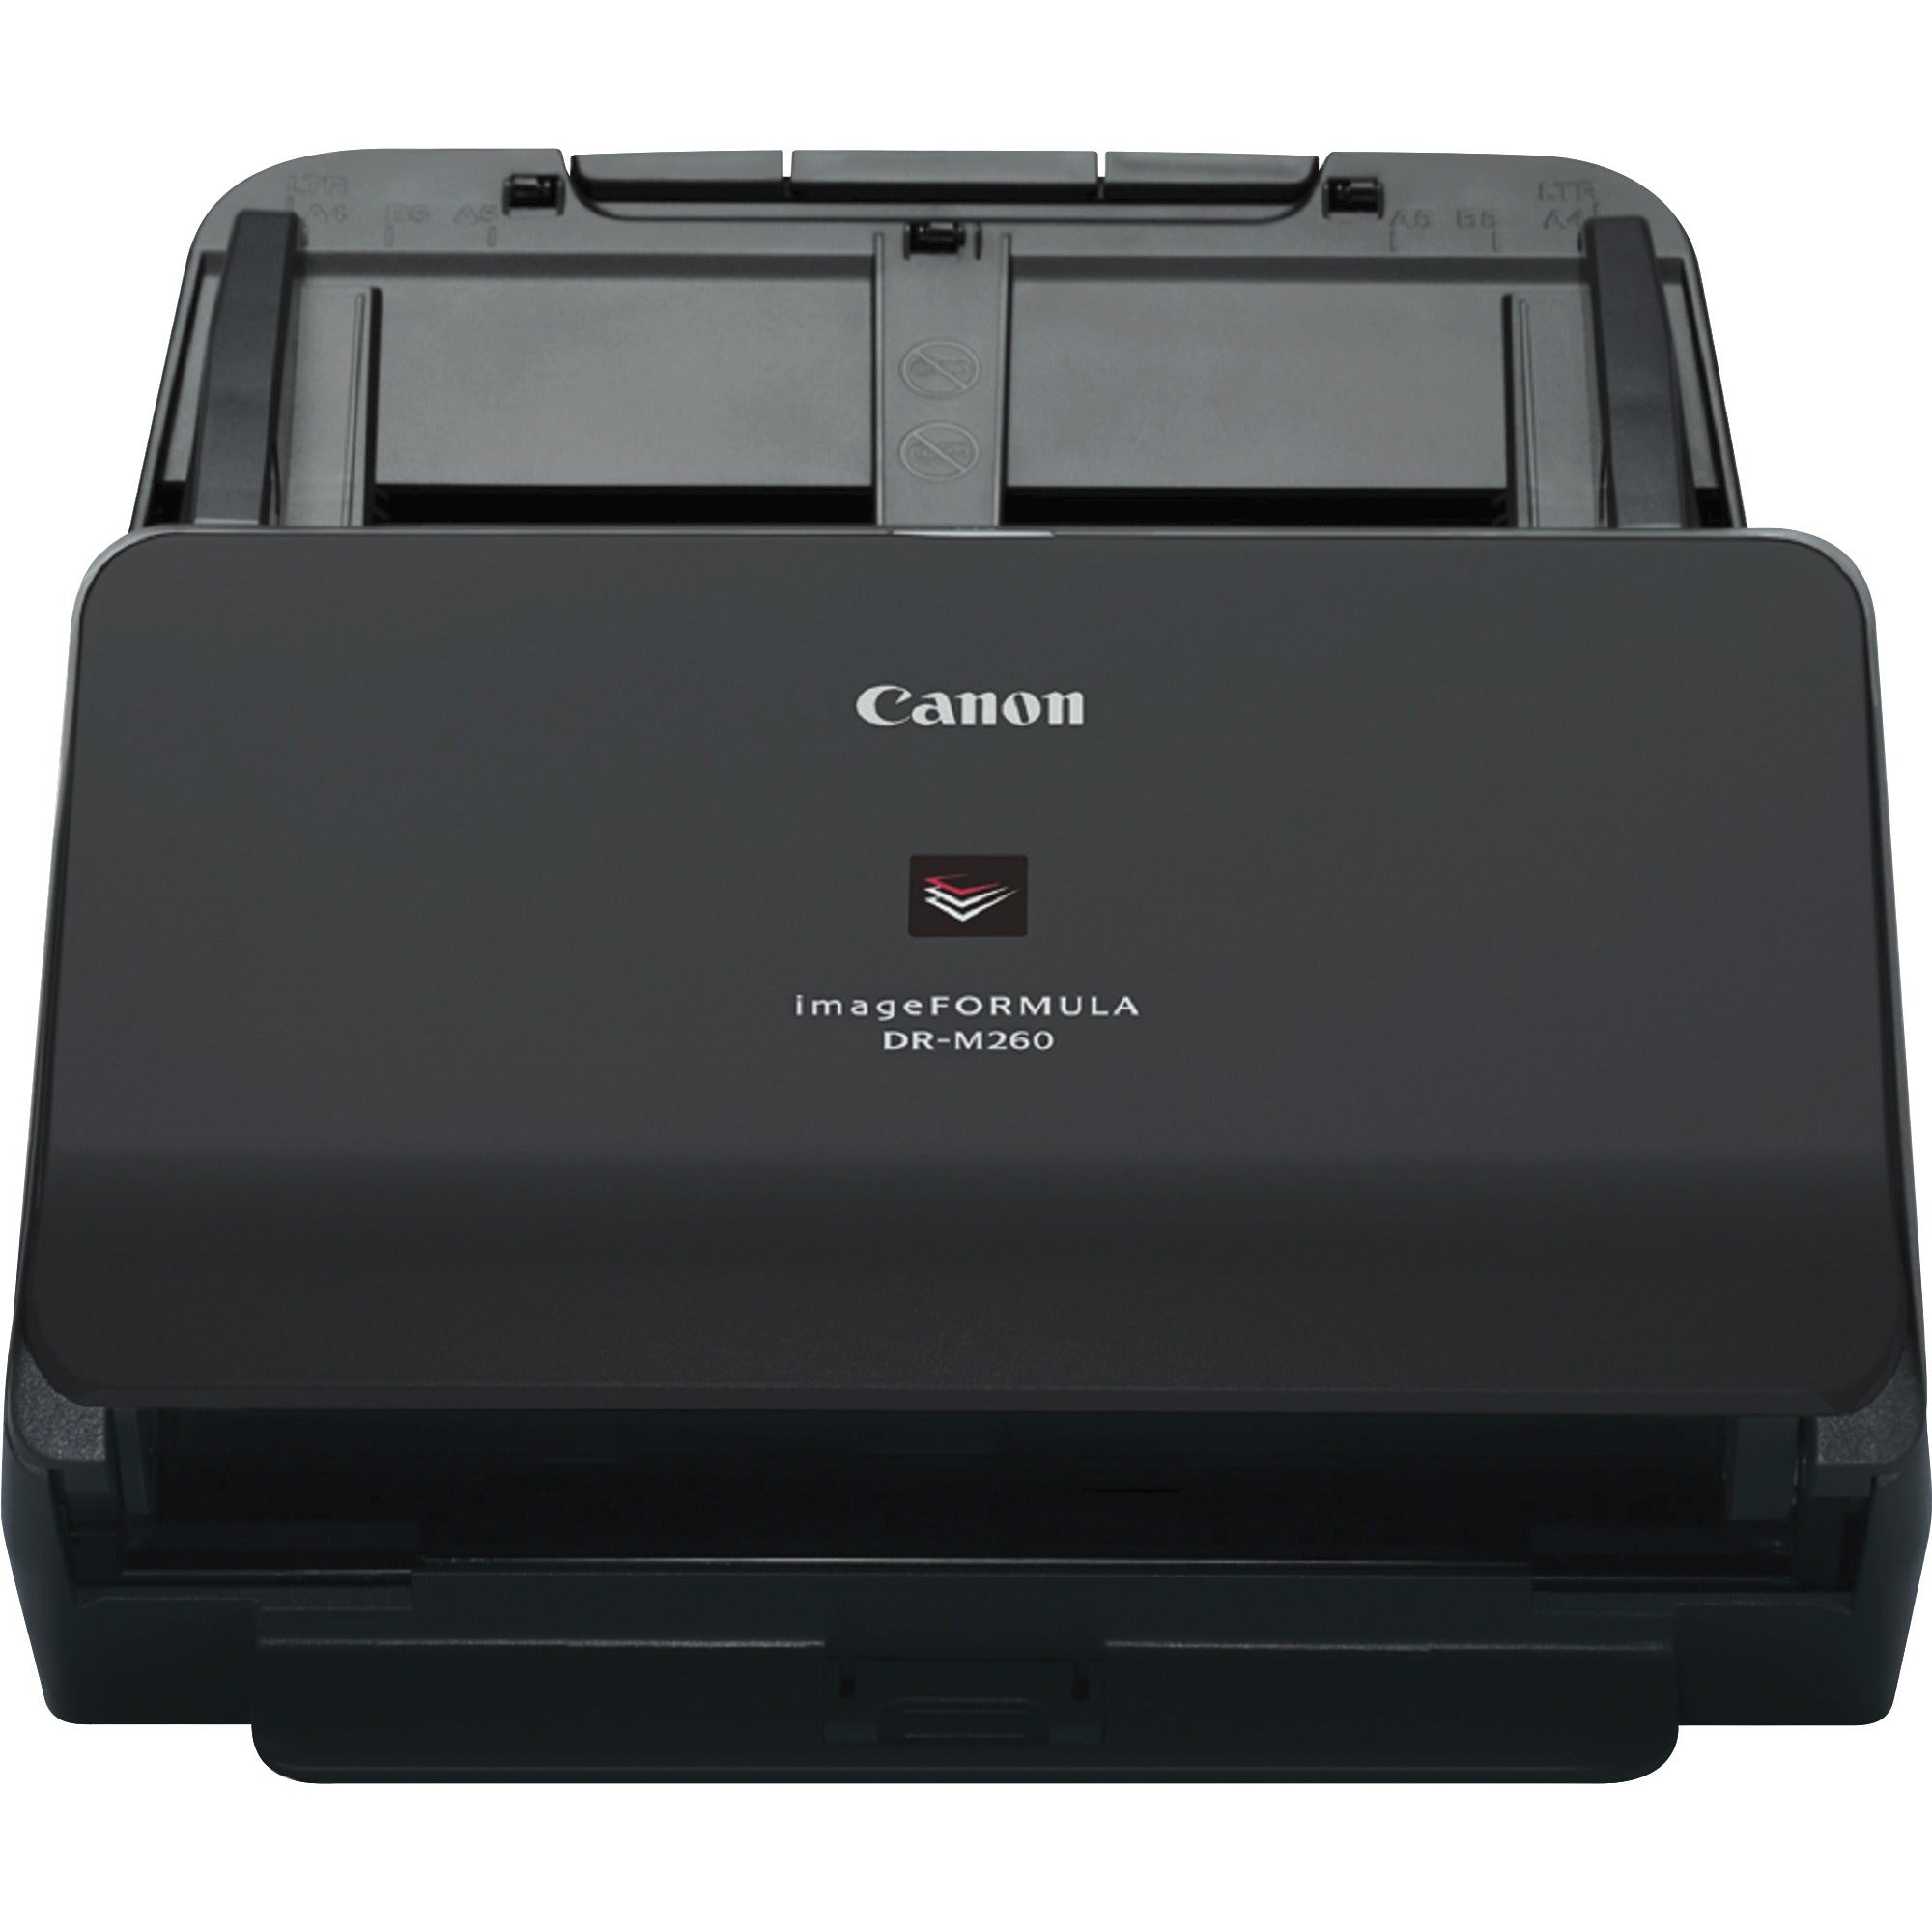 canon-imageformula-dr-m260-sheetfed-scanner-600-dpi-optical-24-bit-color-60-ppm-mono-60-ppm-color-duplex-scanning-usb_cnmdrm260 - 2